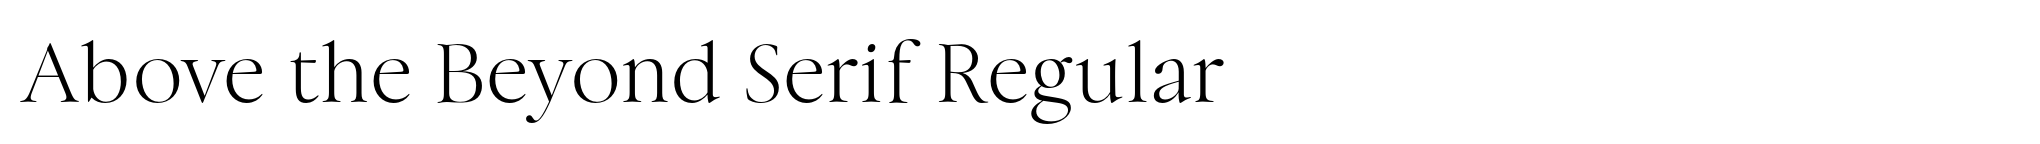 Above the Beyond Serif Regular image